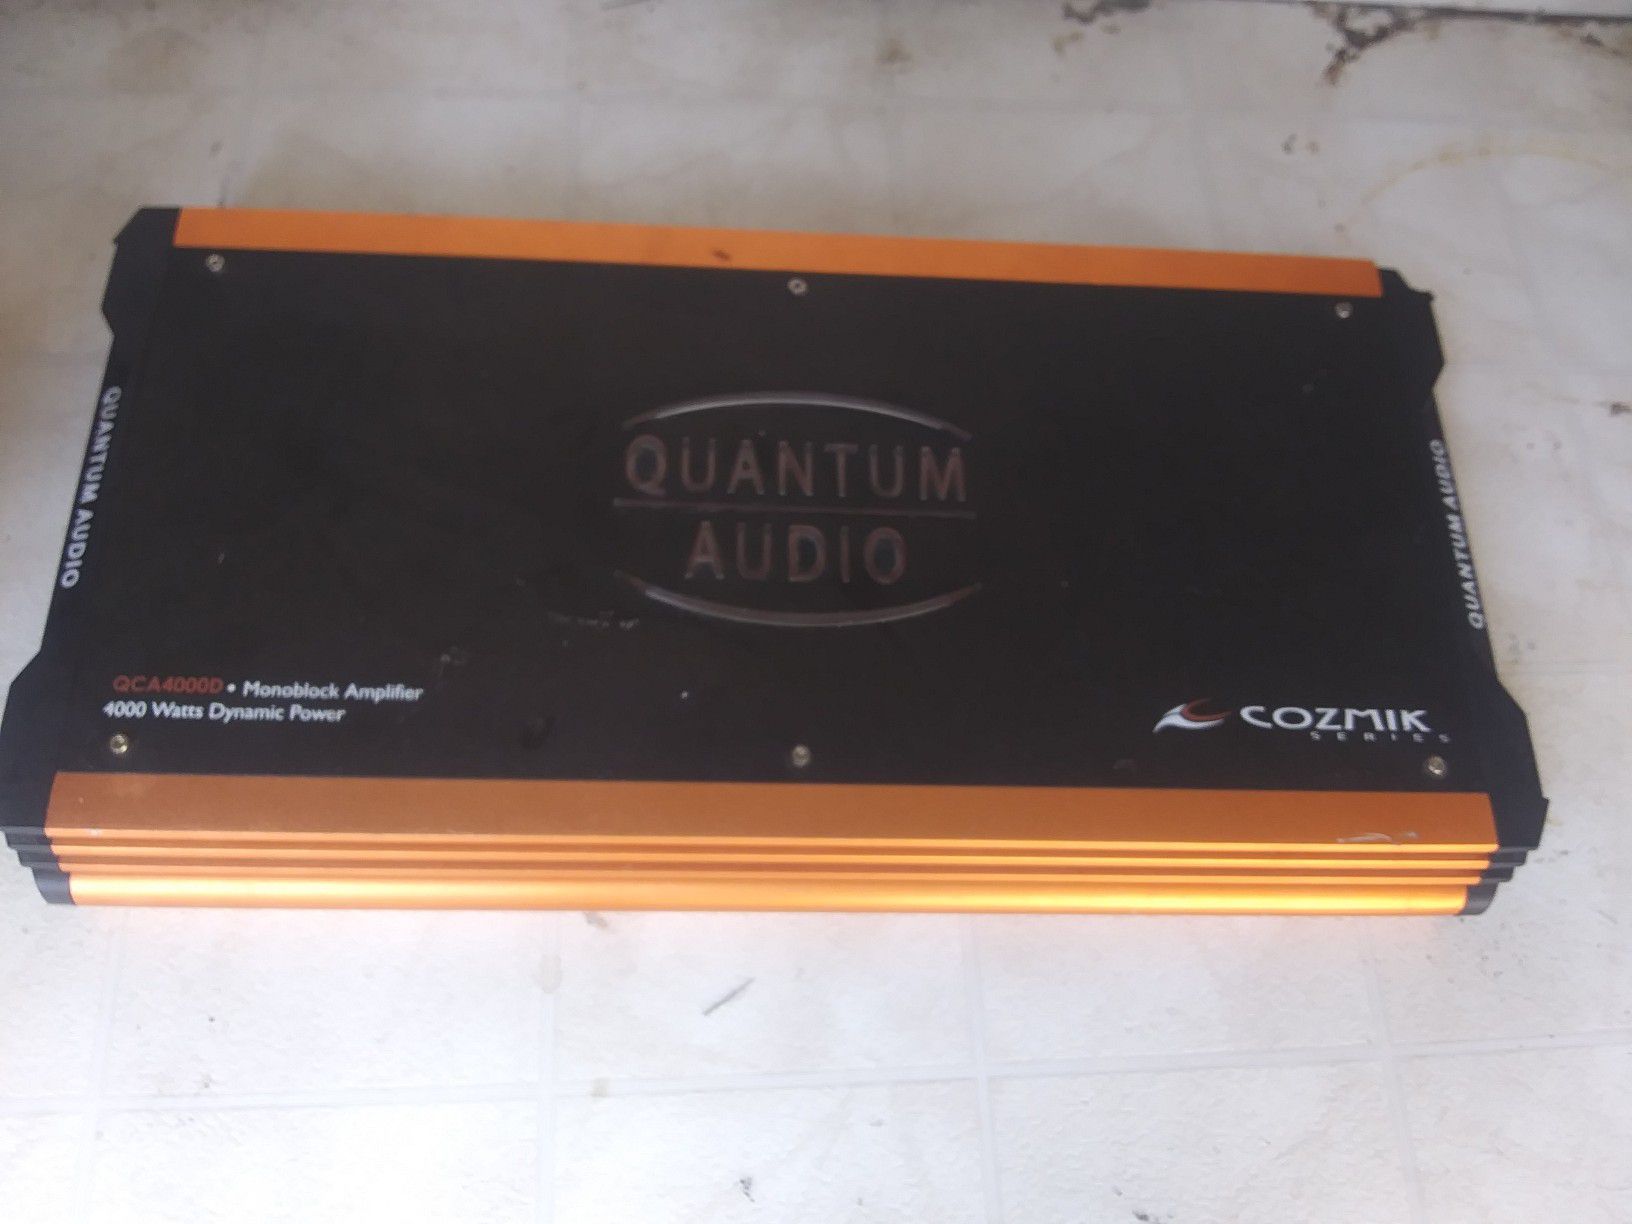 Quantum audio 4000 wat class d